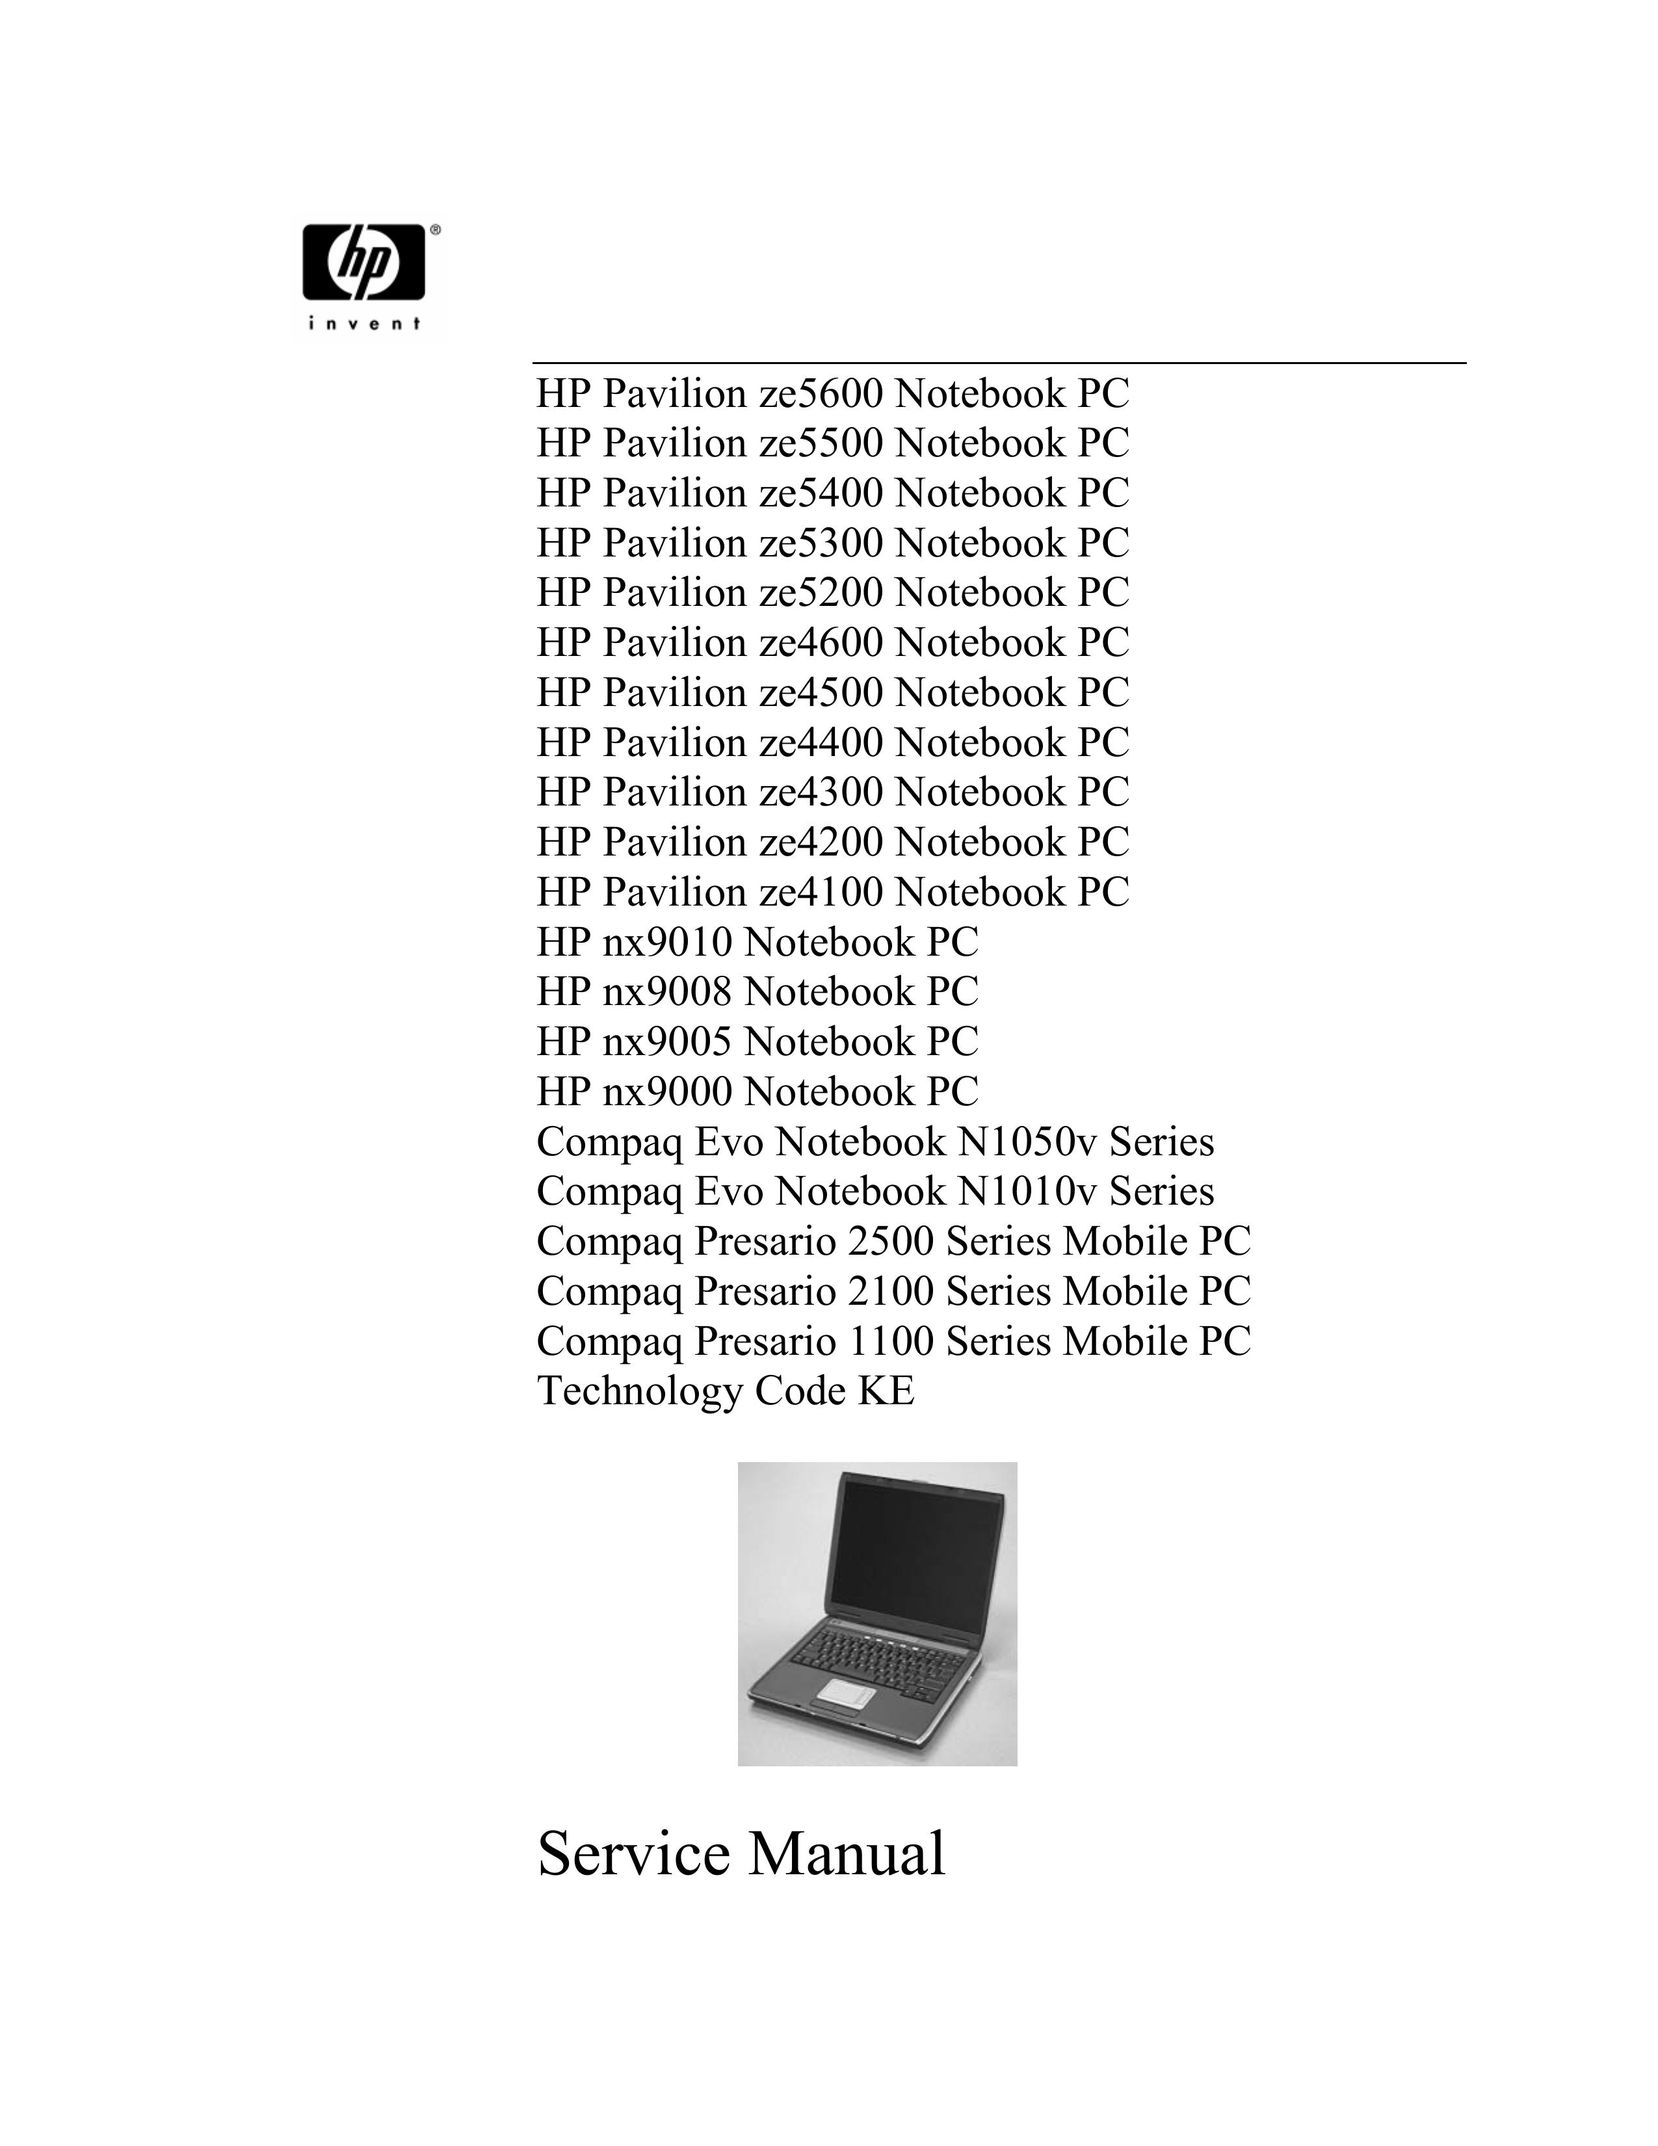 HP (Hewlett-Packard) NX9005 Tablet Accessory User Manual